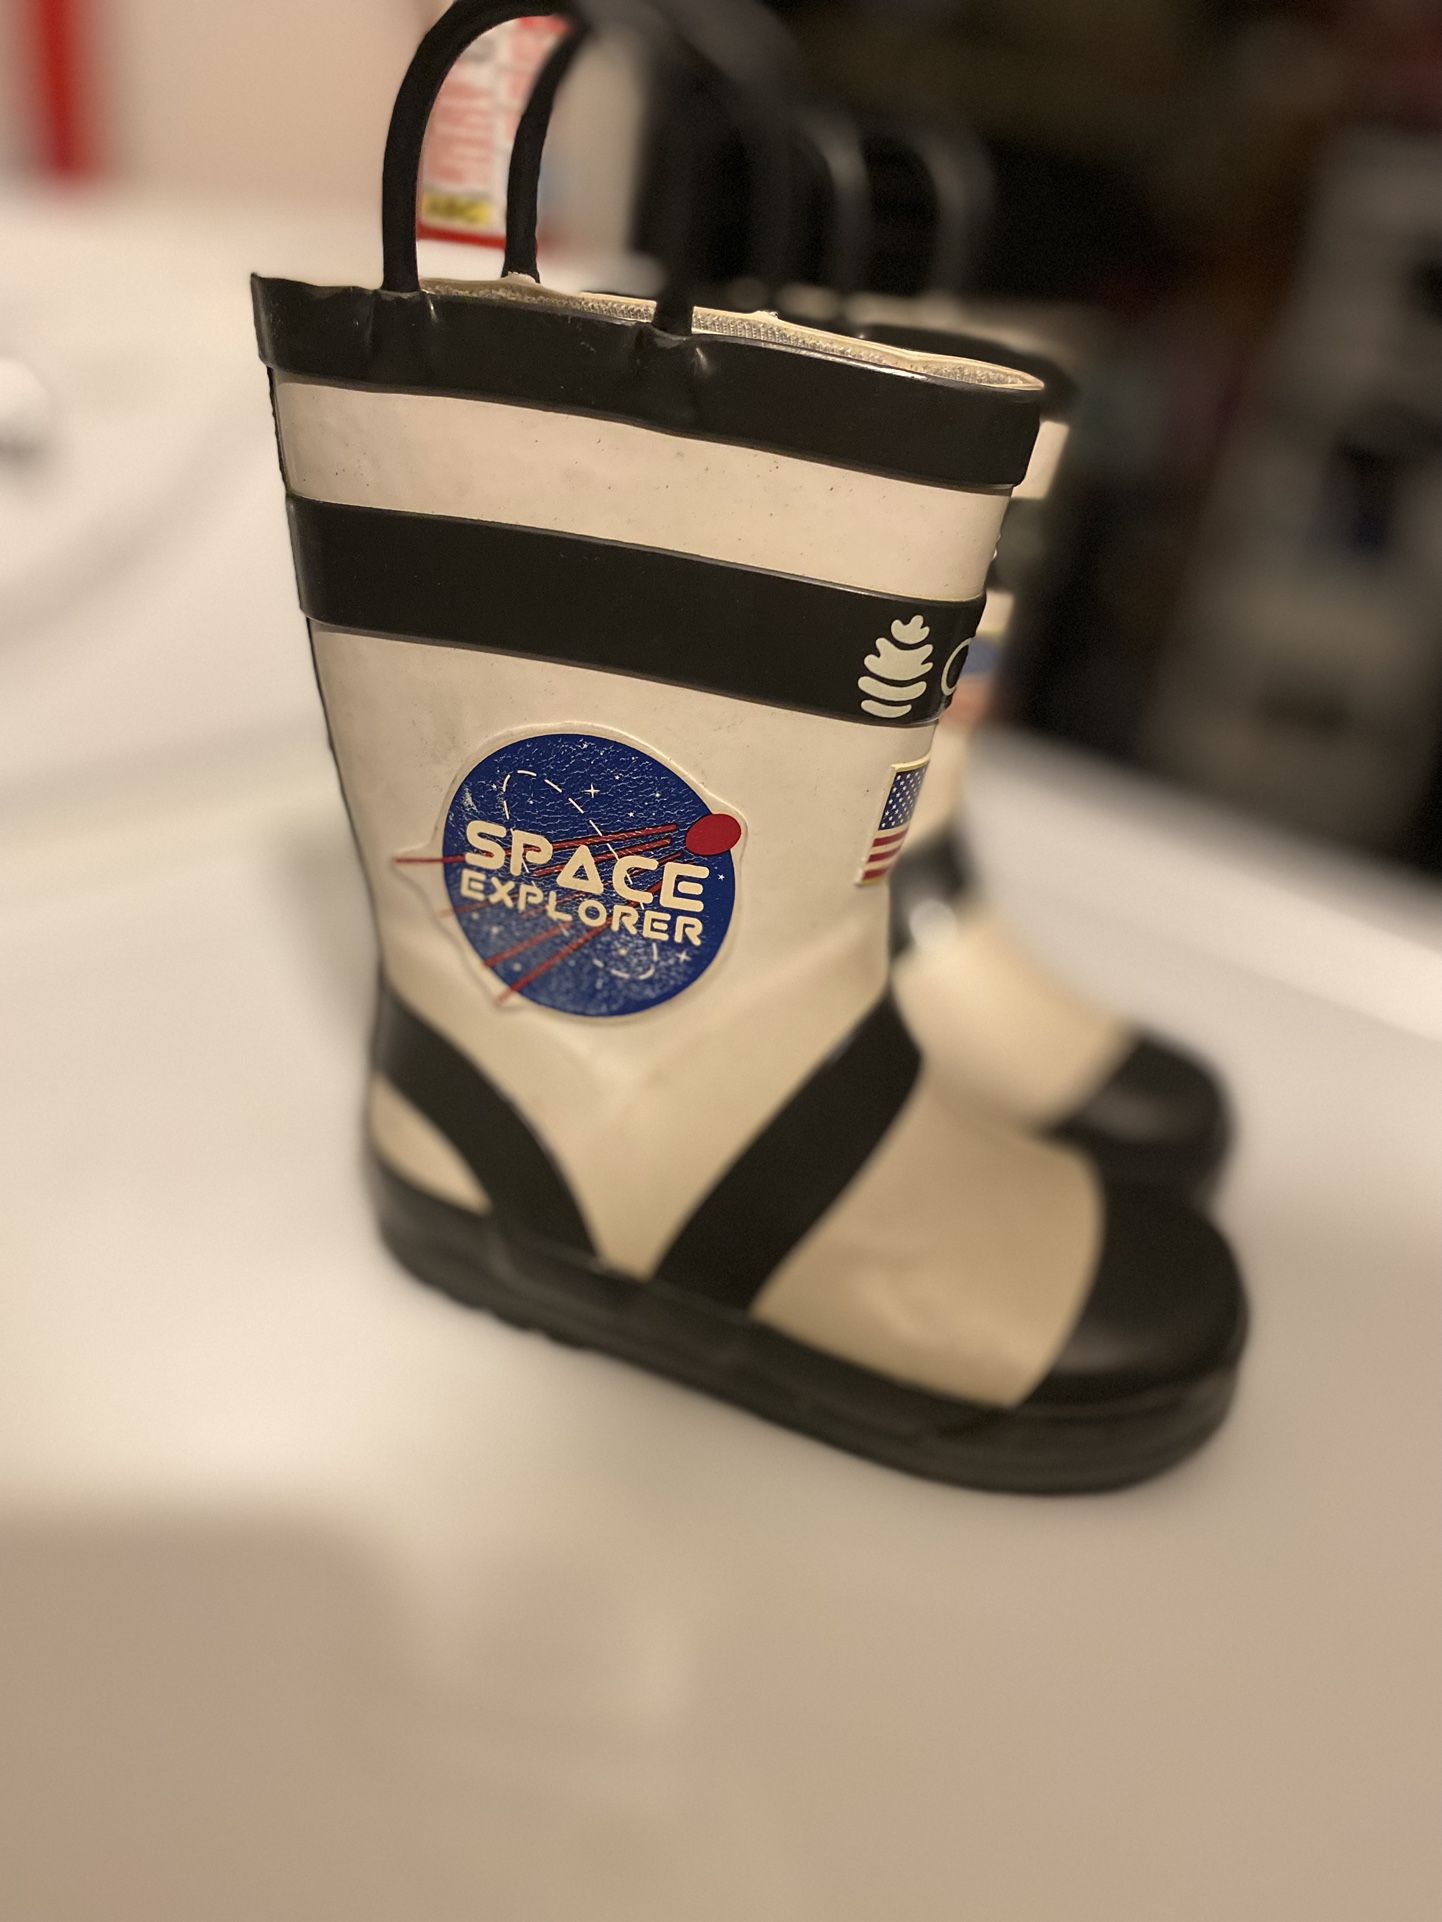 Space Rain Boots Size 8